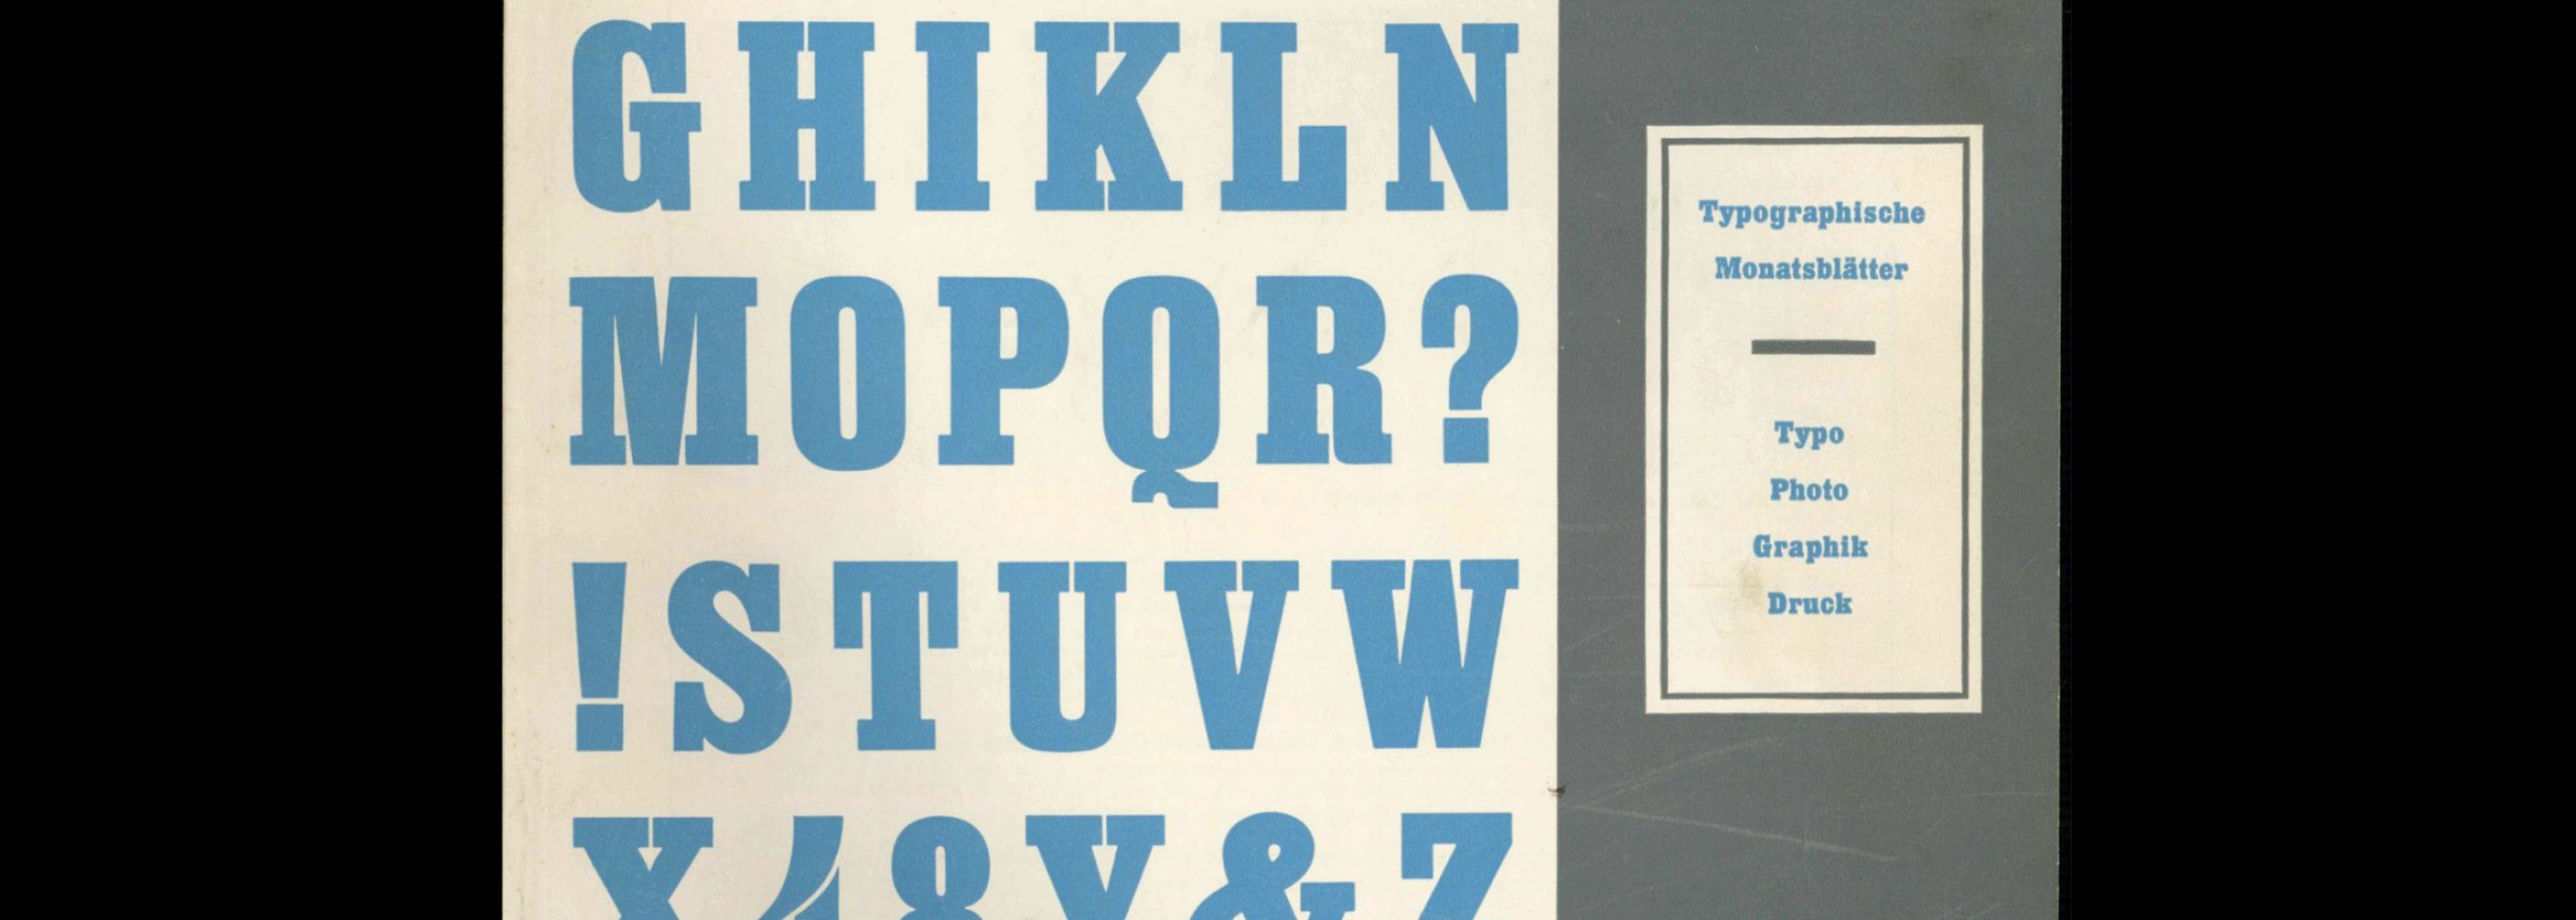 Typografische Monatsblätter, 10, 1947